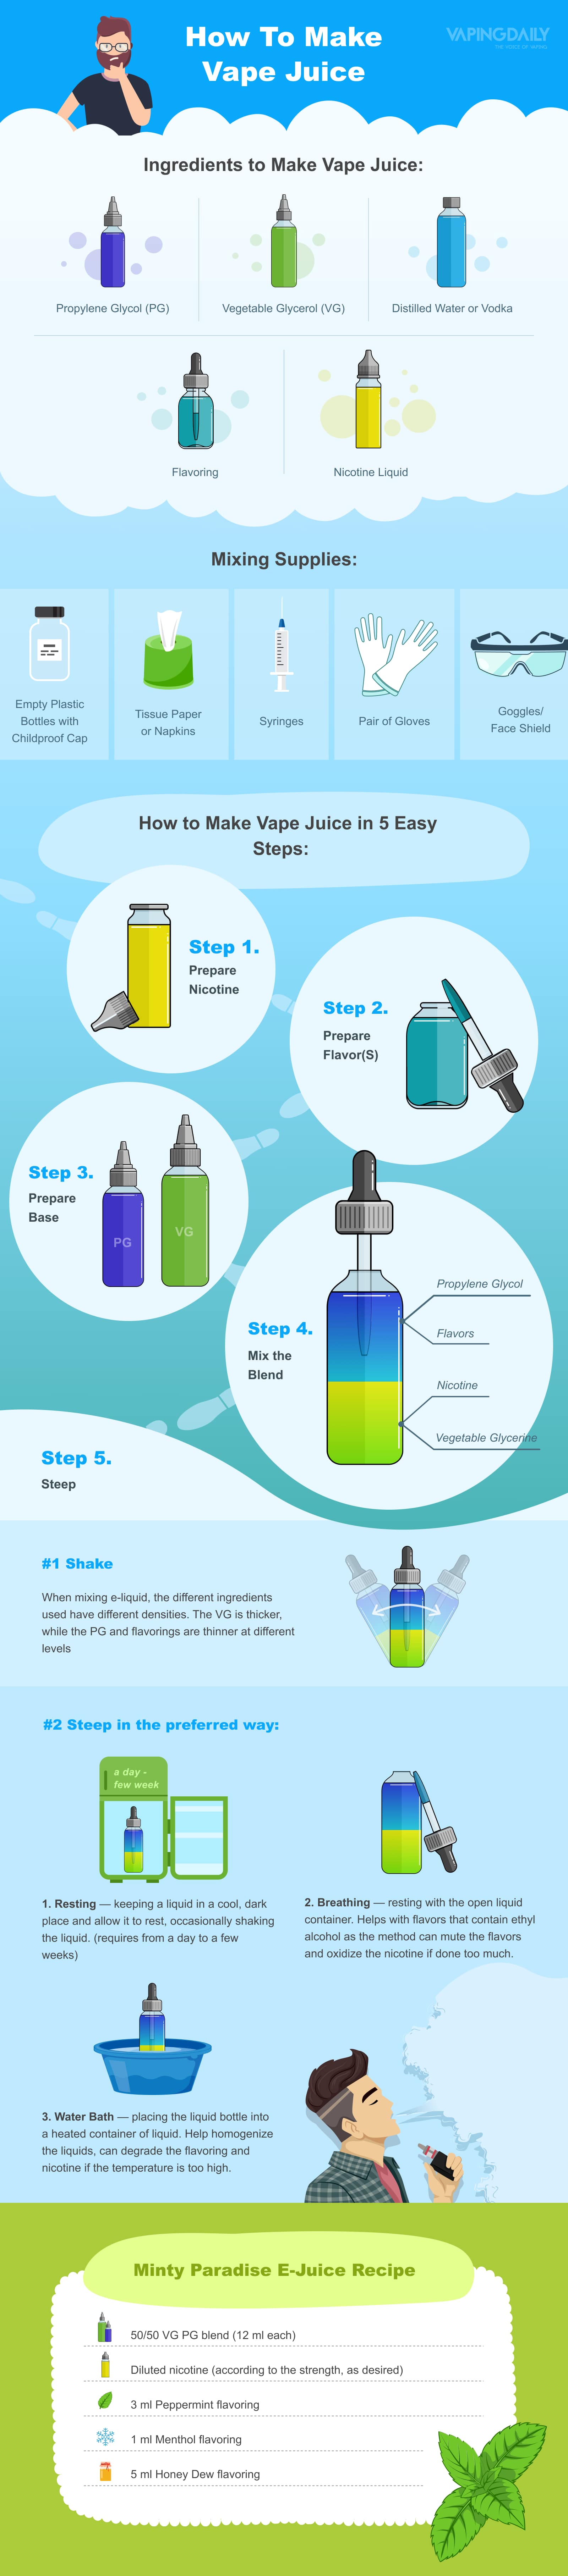 How to Make Vape Juice, DIY E-Juice